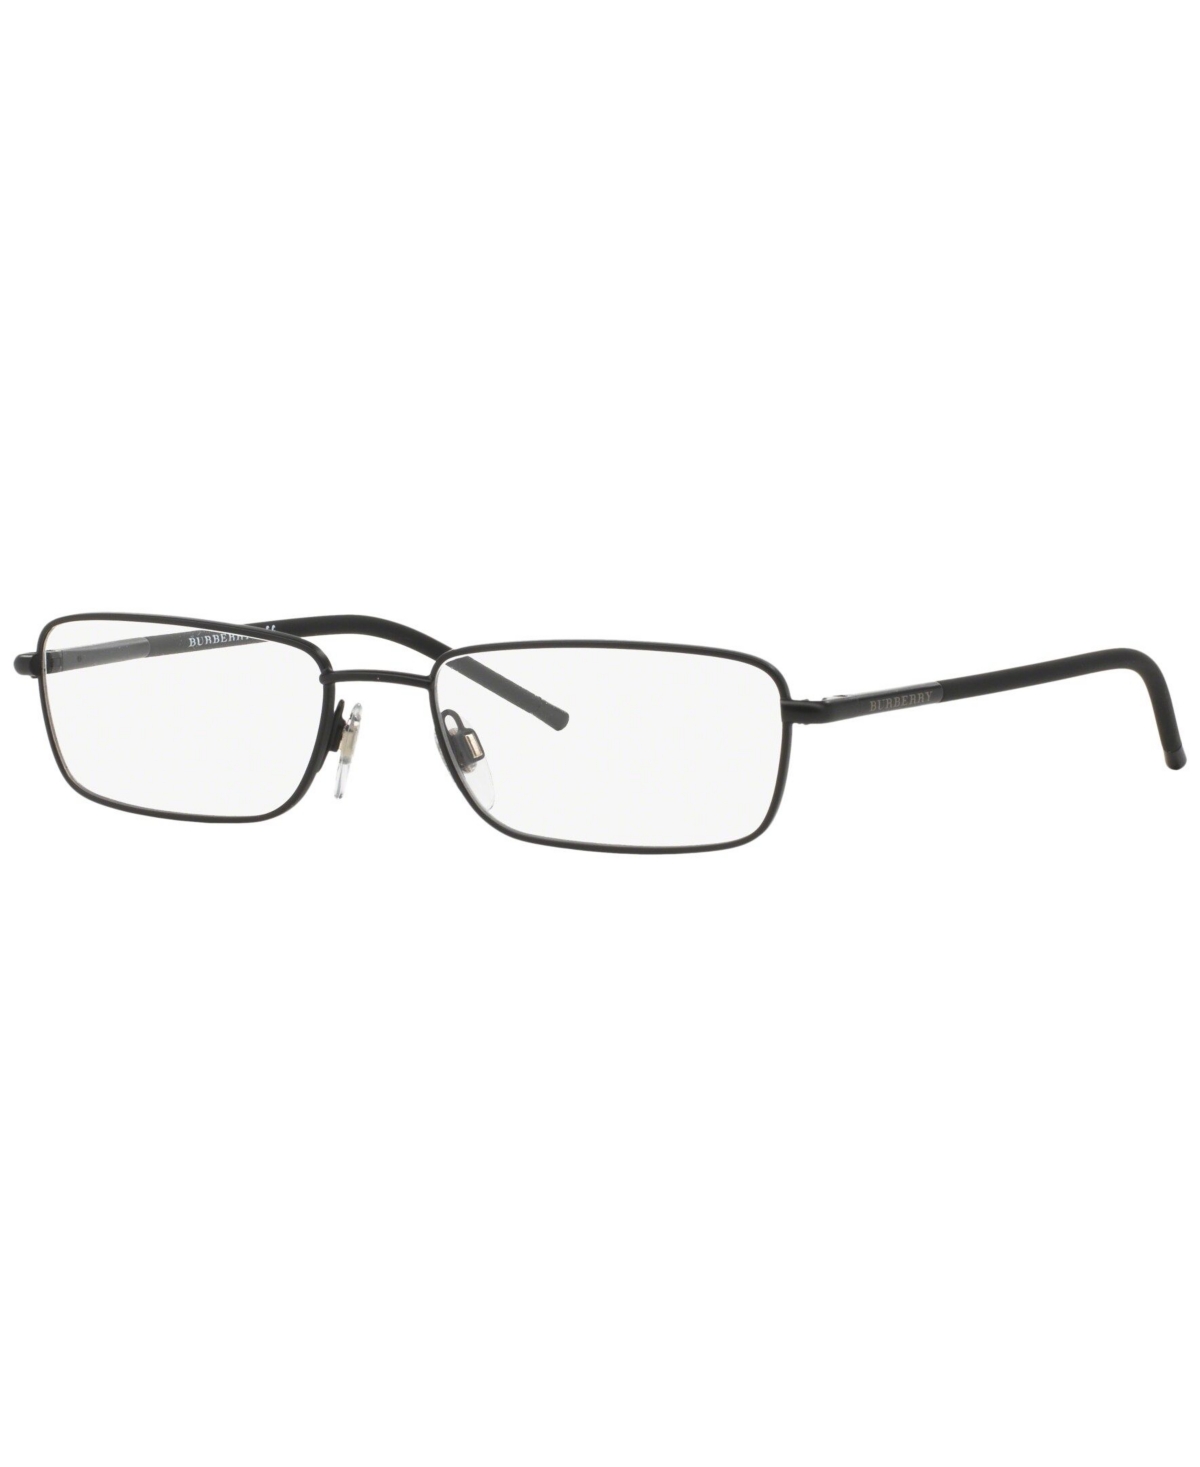 BE1268 Men's Rectangle Eyeglasses - Matte Blac